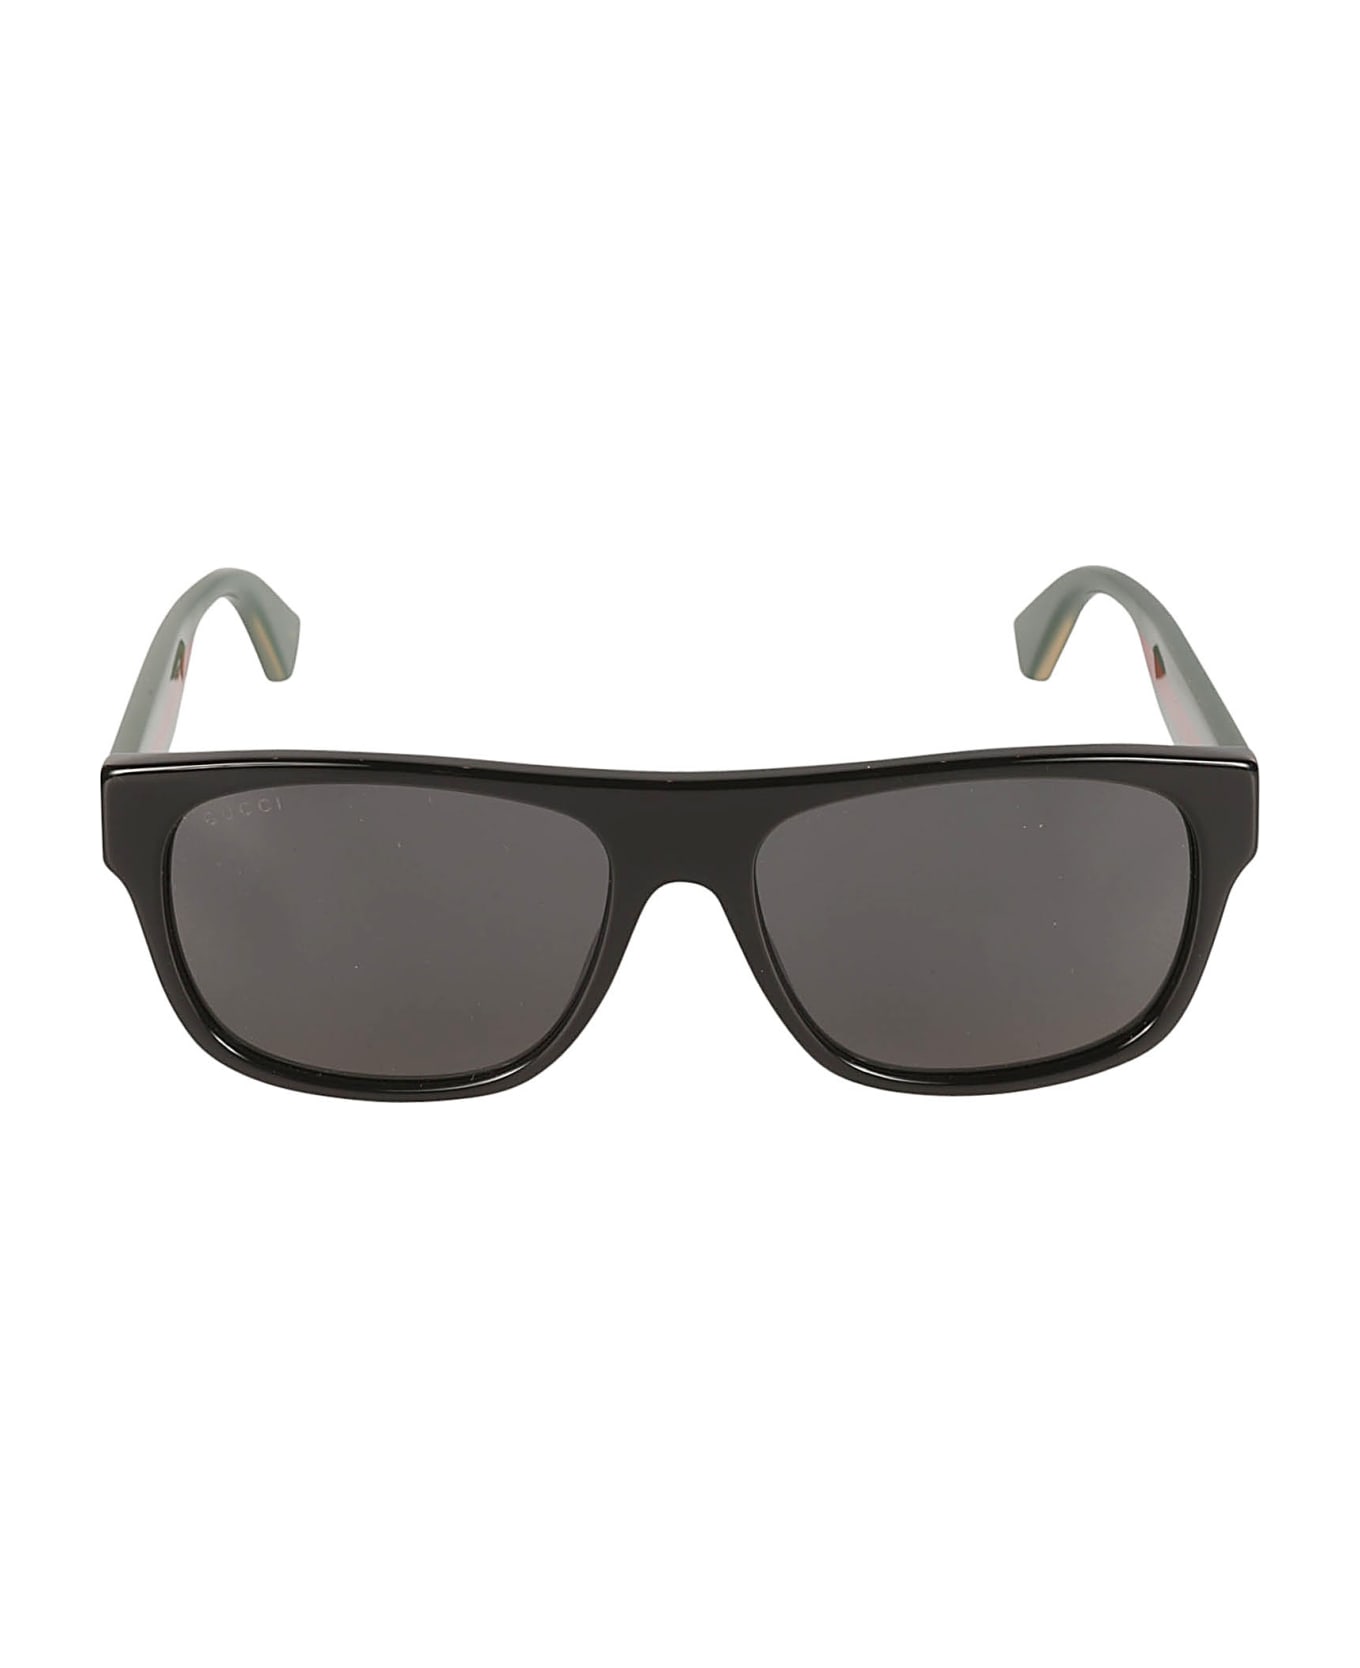 Gucci Eyewear Geometric Classic Sunglasses - Black/Multicolor